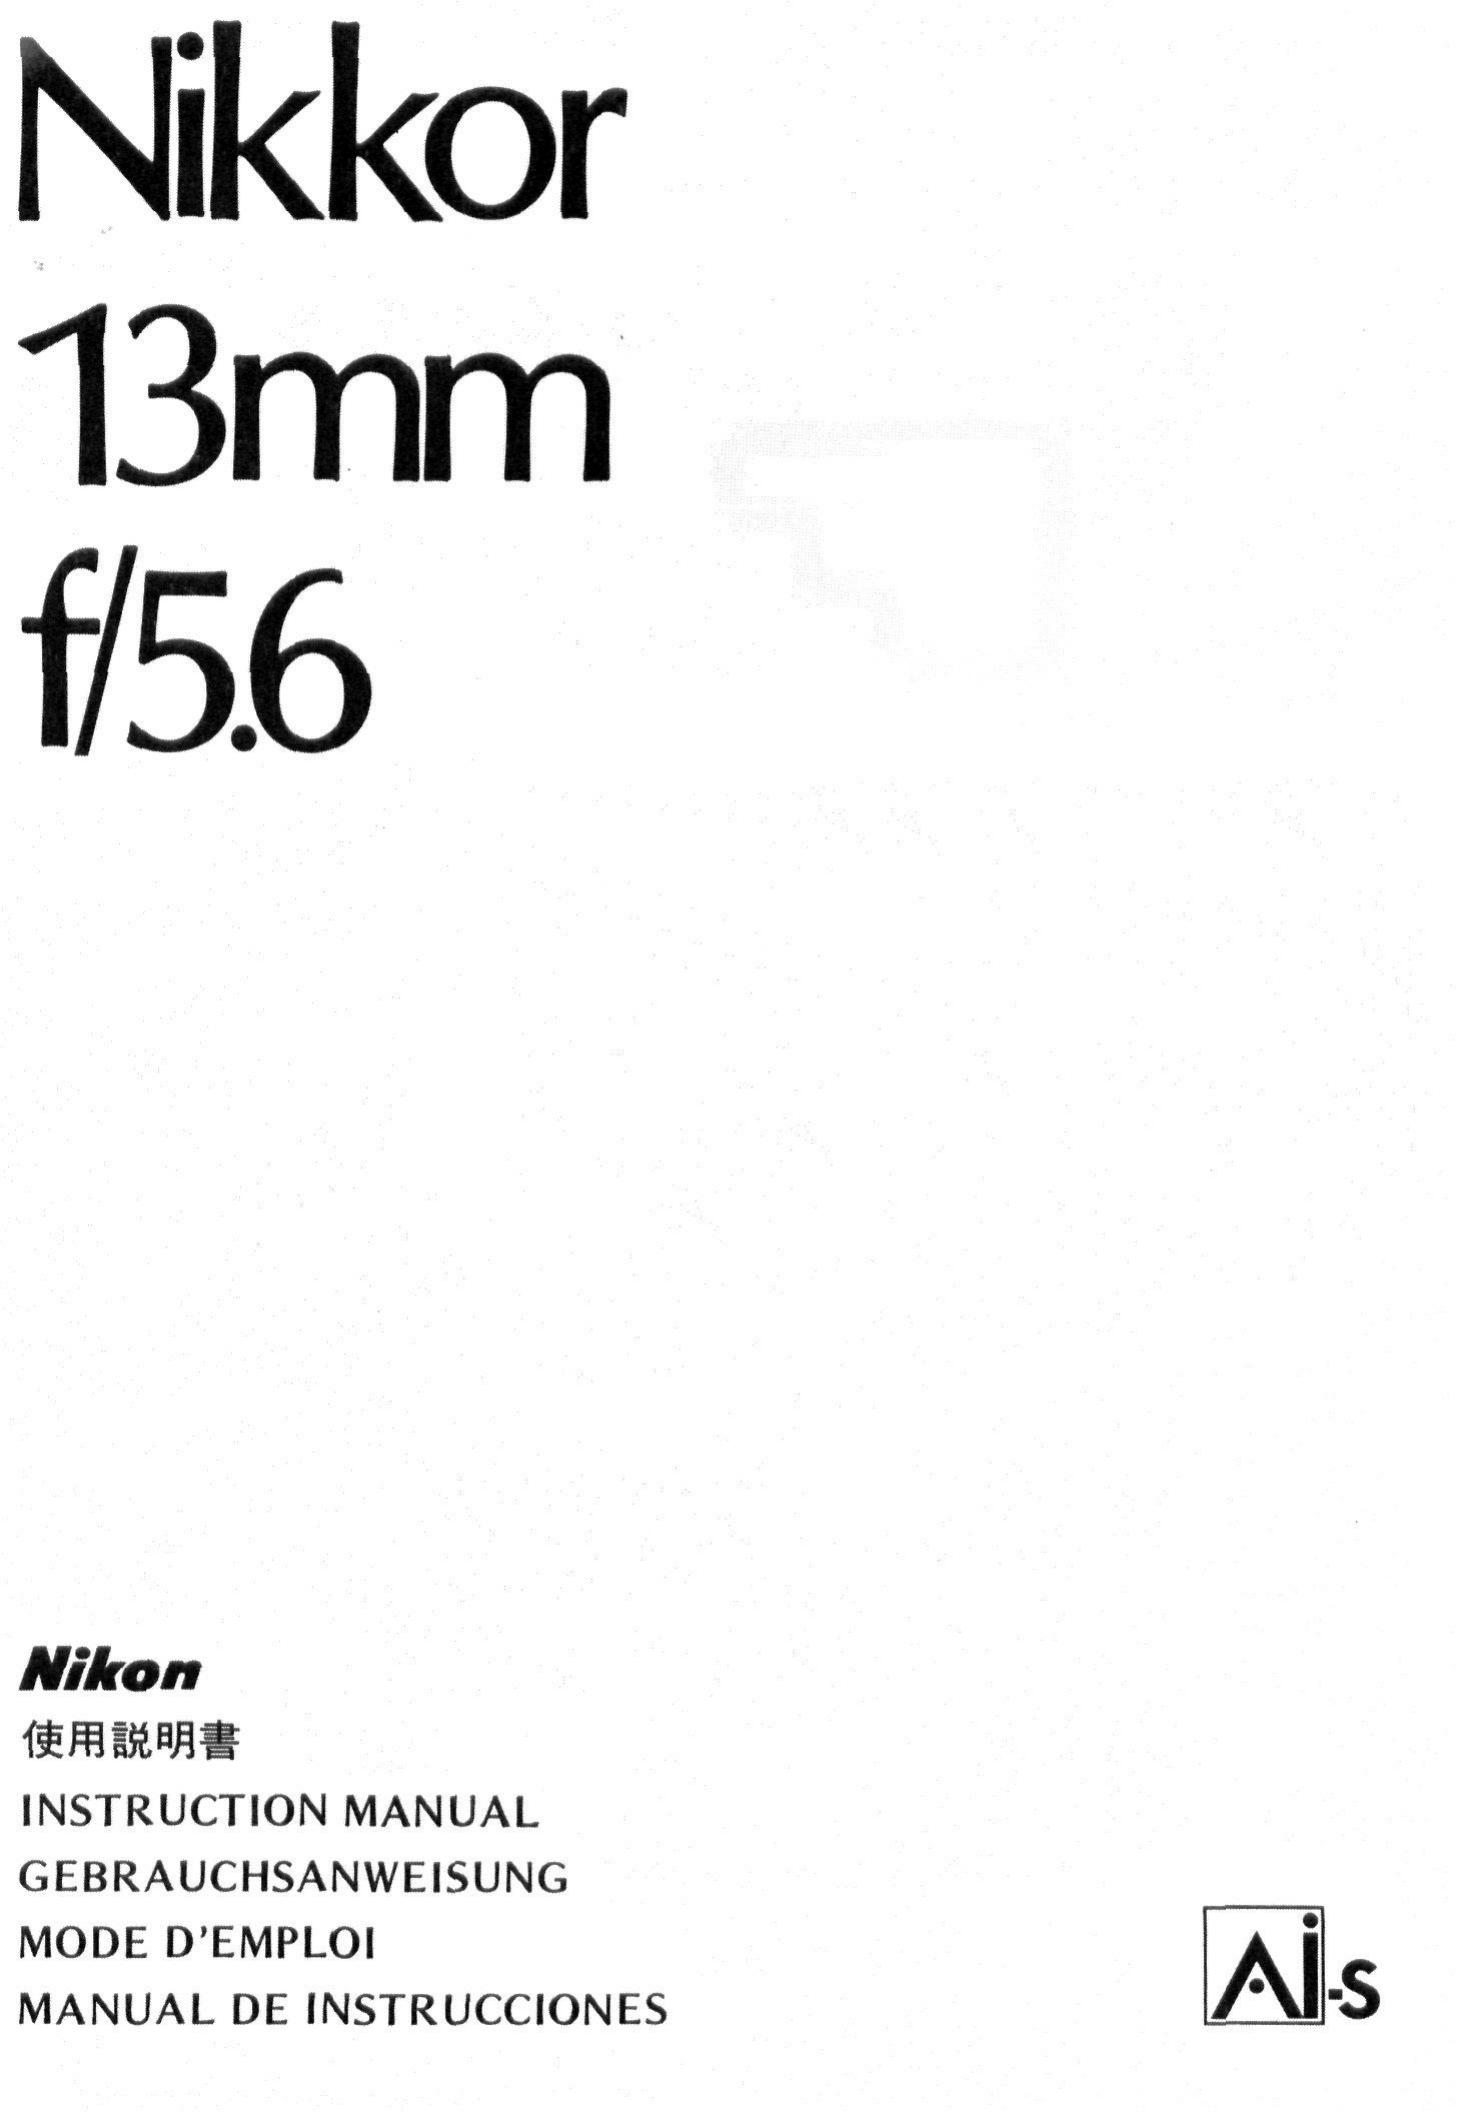 Nikon 13mm Digital Camera User Manual